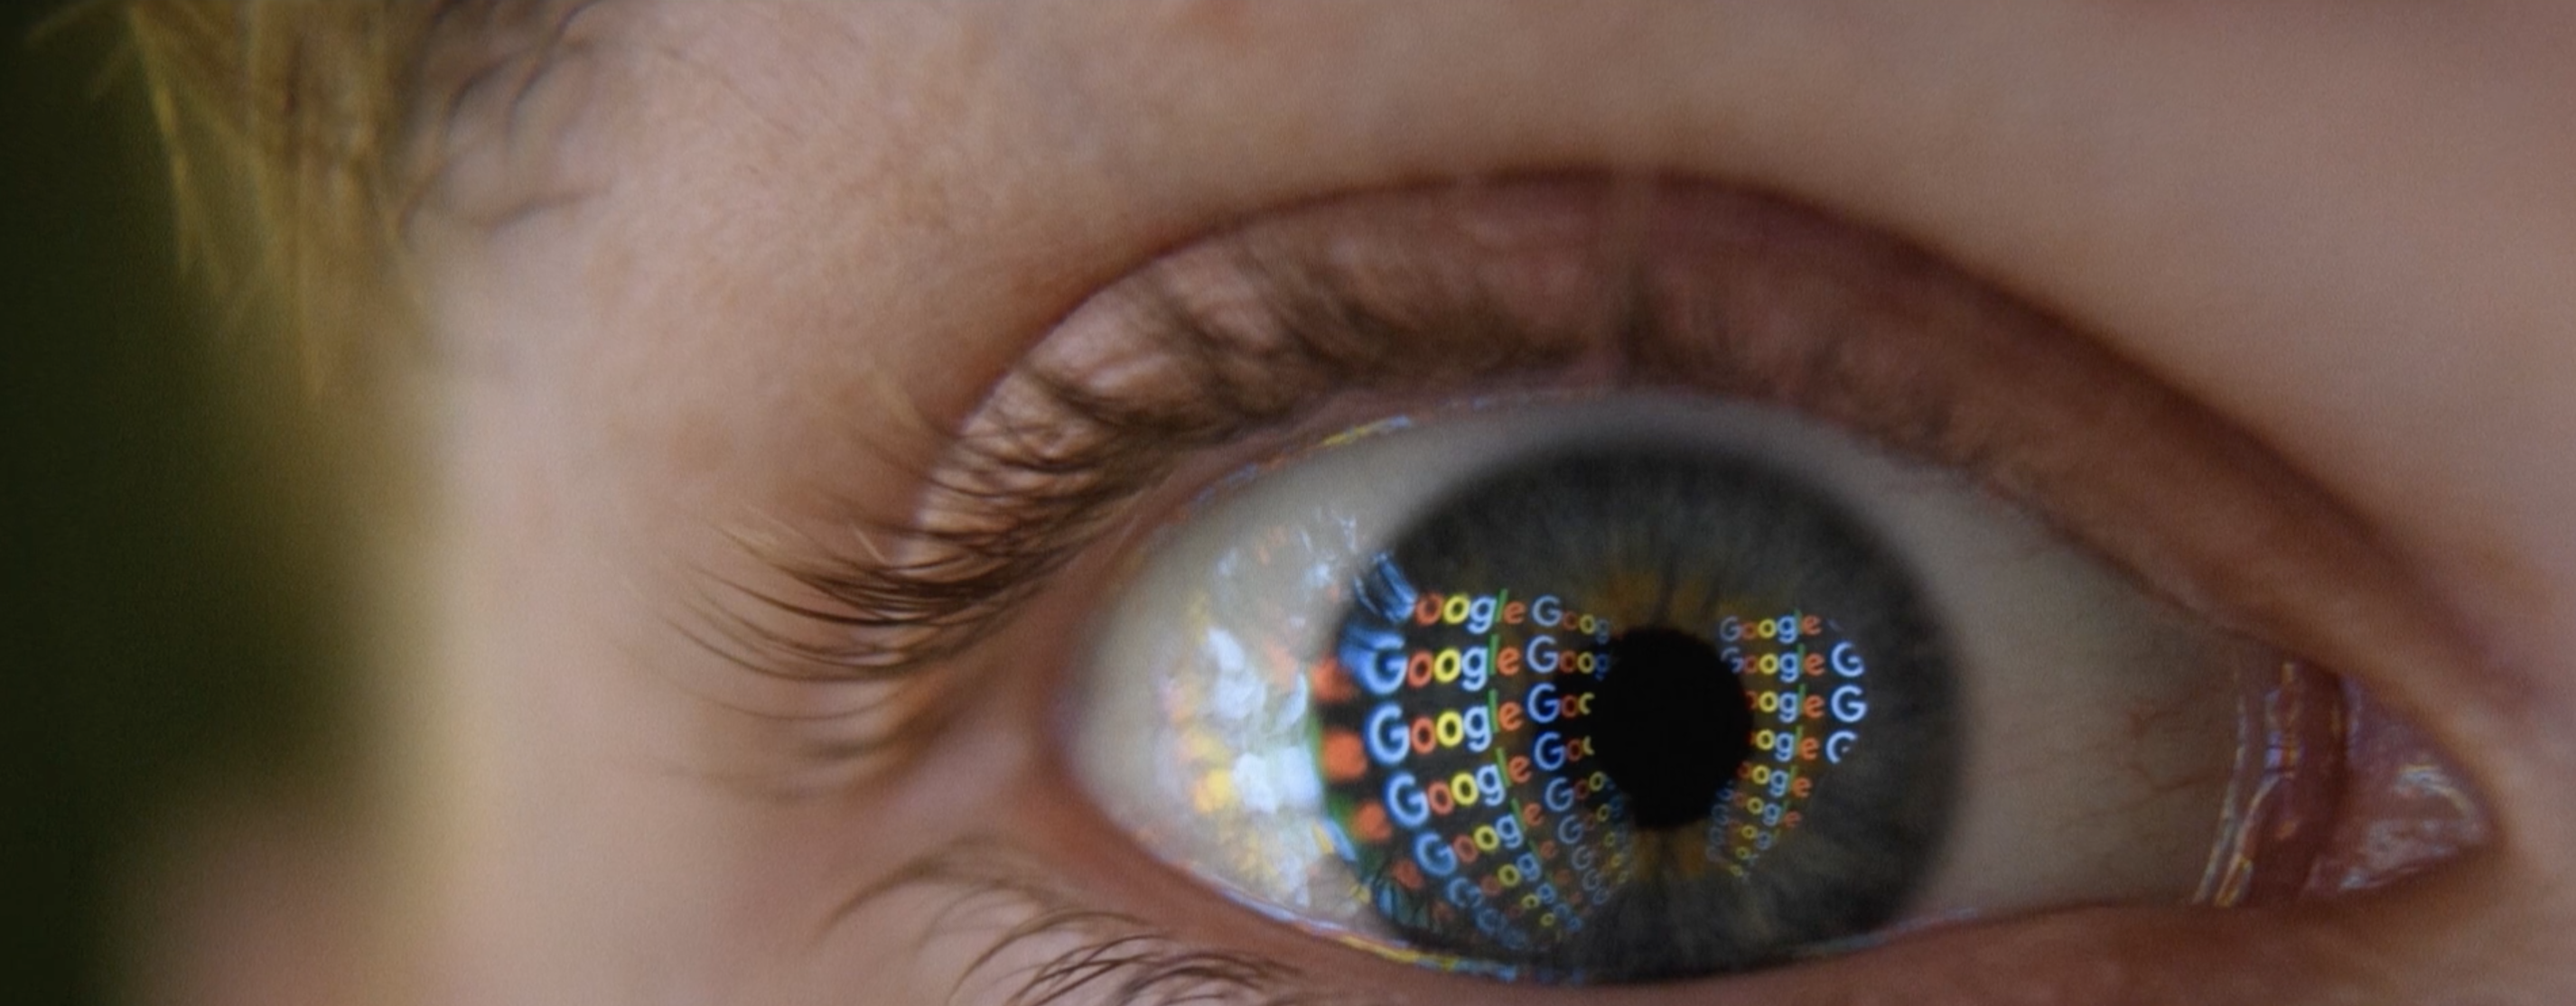 Eyeball with Google reflected